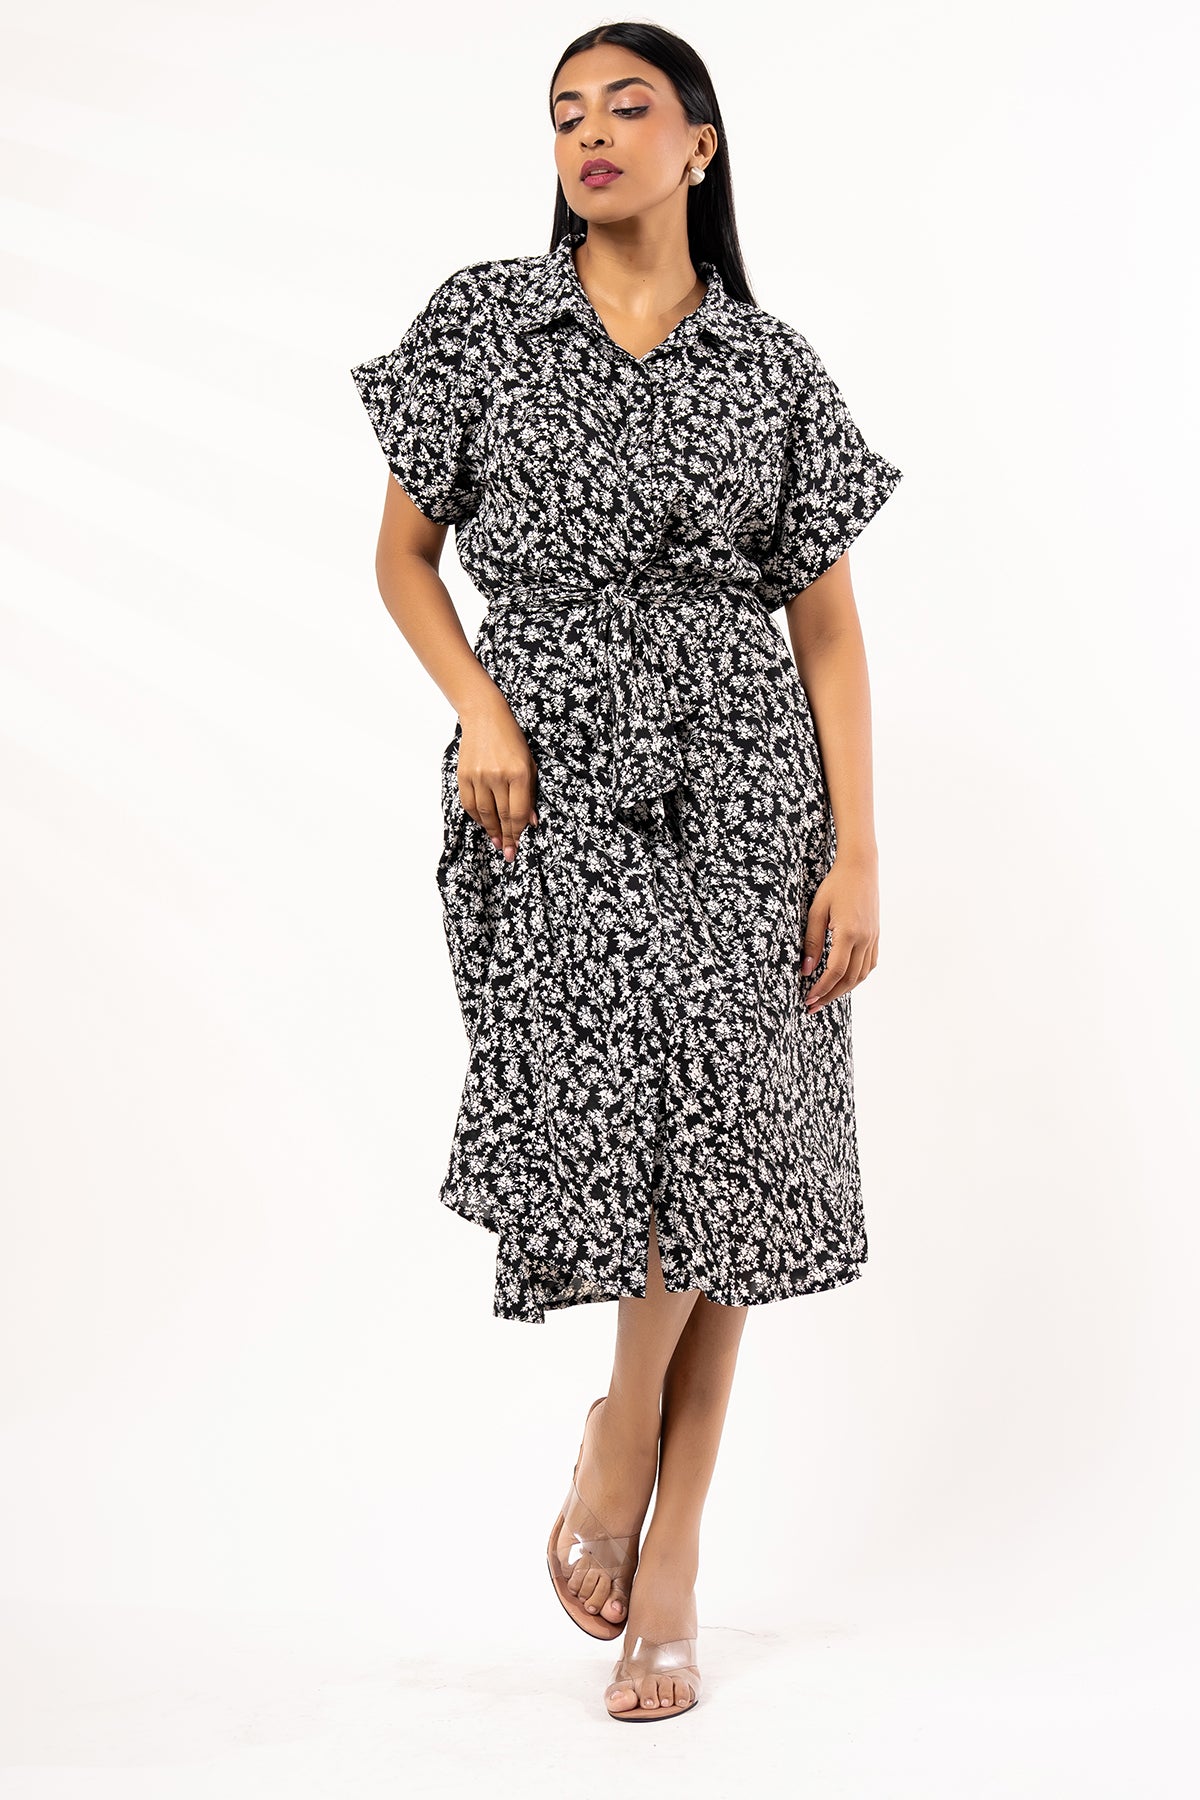 Envogue Women's Short Sleeve Printed Office Dress